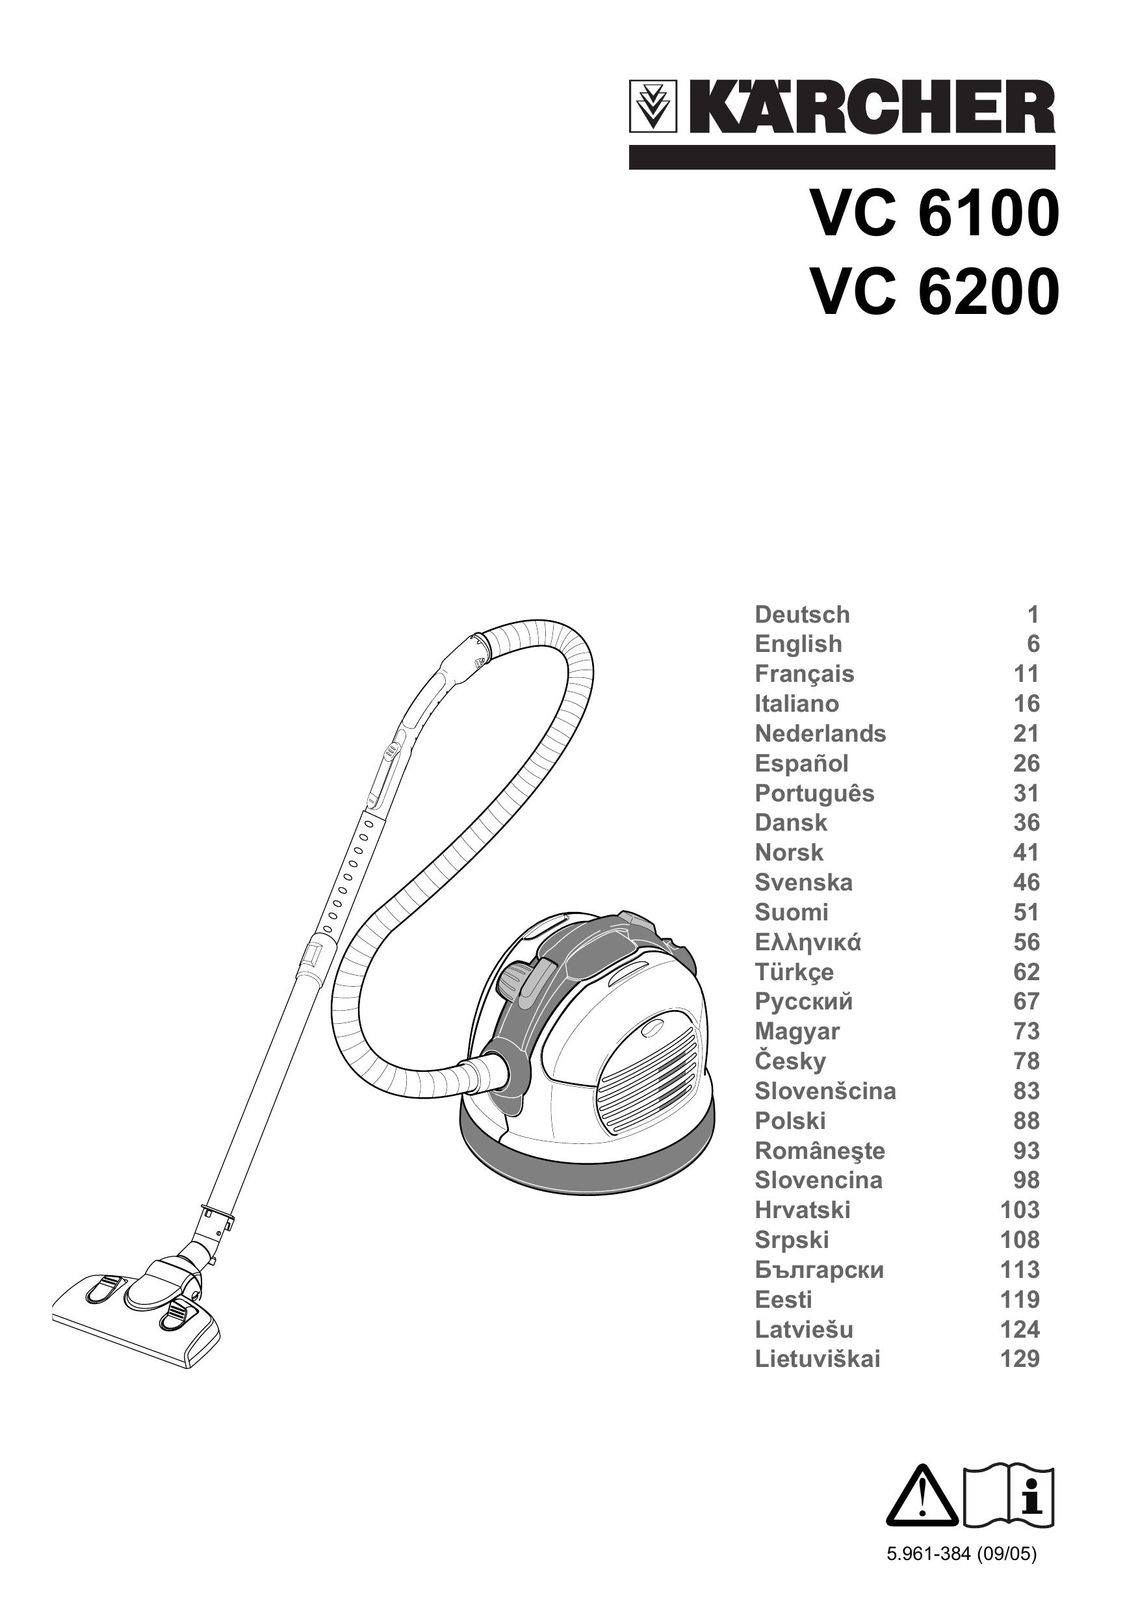 Karcher VC 6200 Vacuum Cleaner User Manual